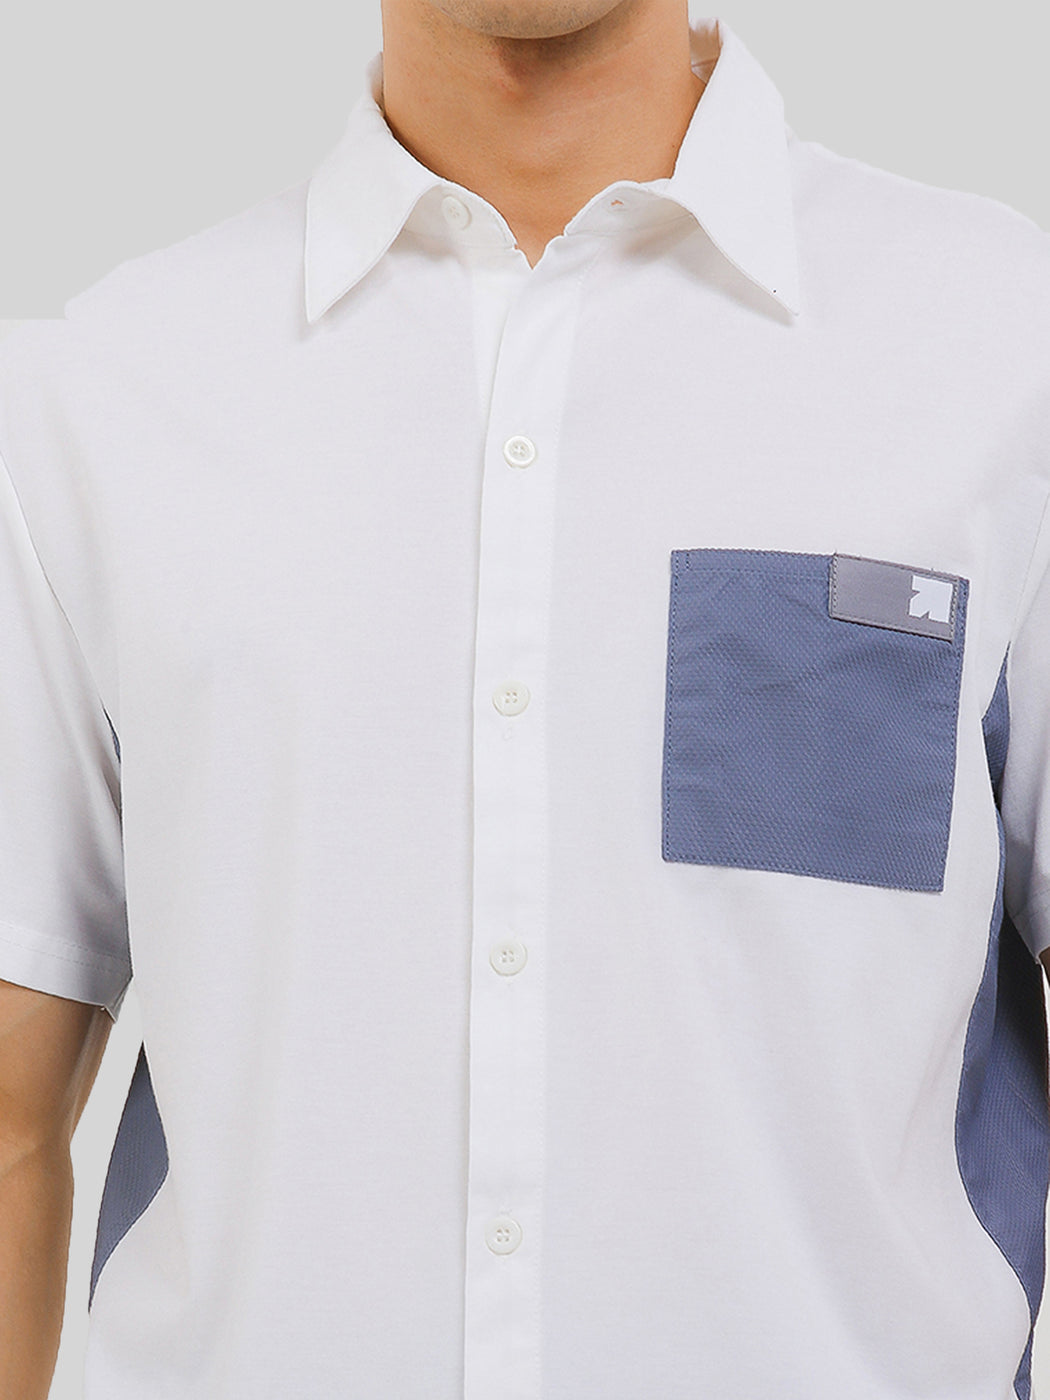 Unisex Ultimate Utilitarian Shirt Male White